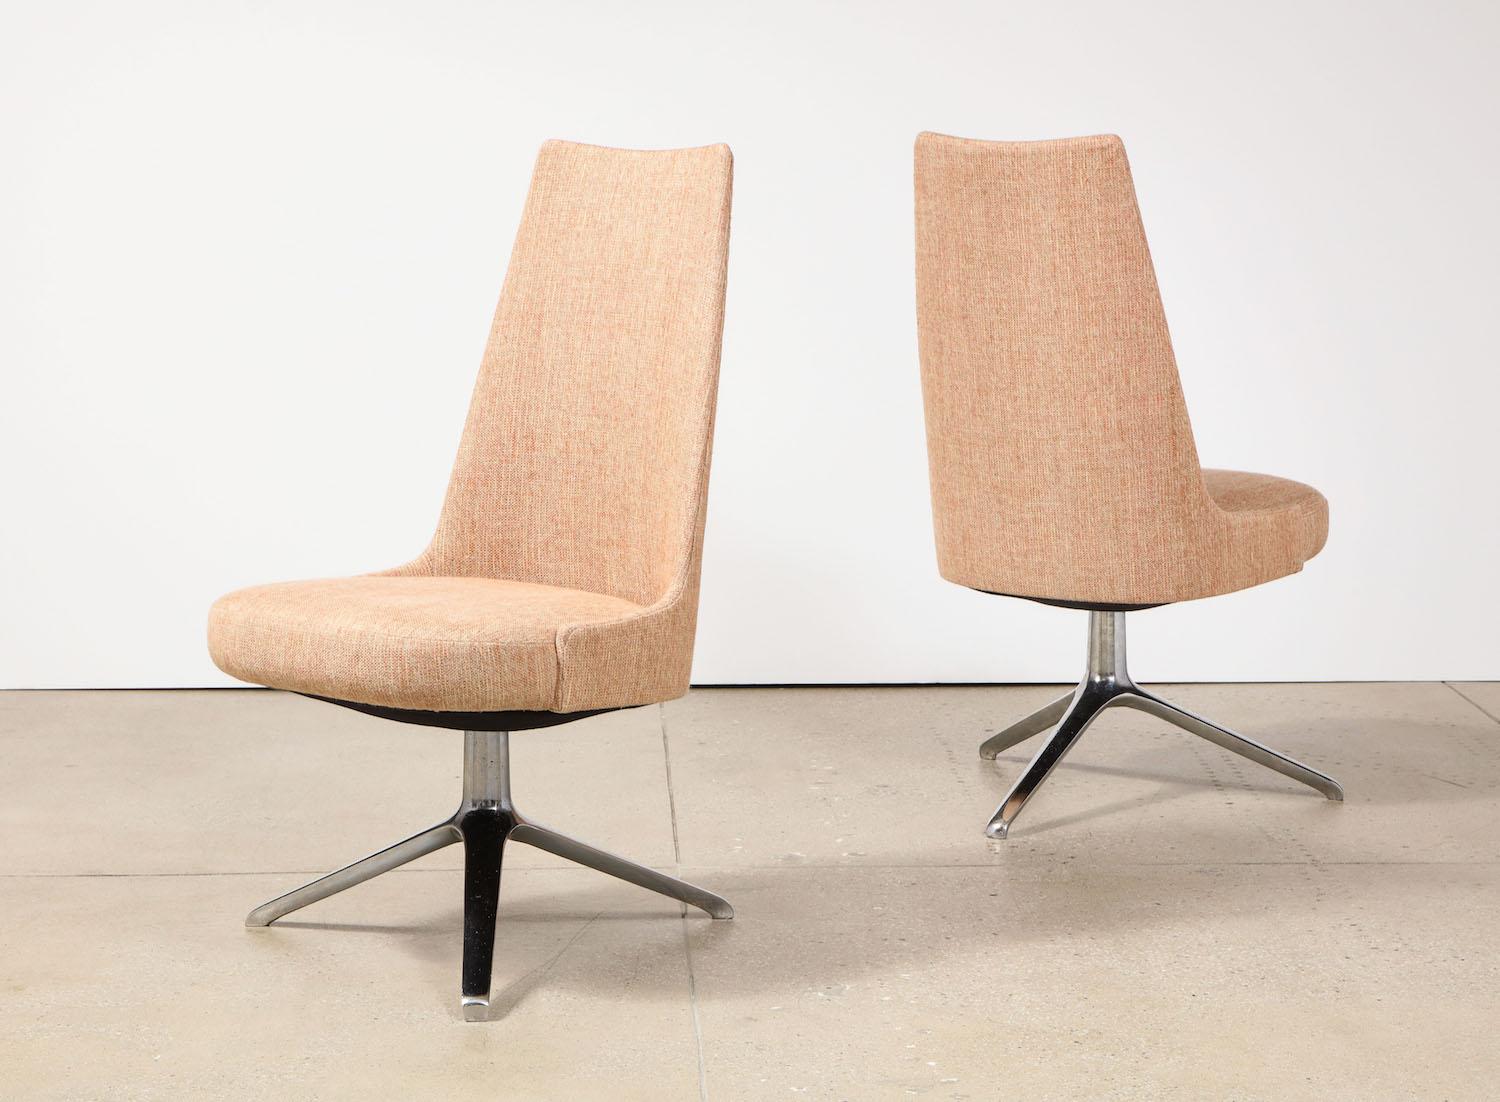 Hand-Crafted High Back Swivel Chairs by Osvaldo Borsani & Valeria Fantoni